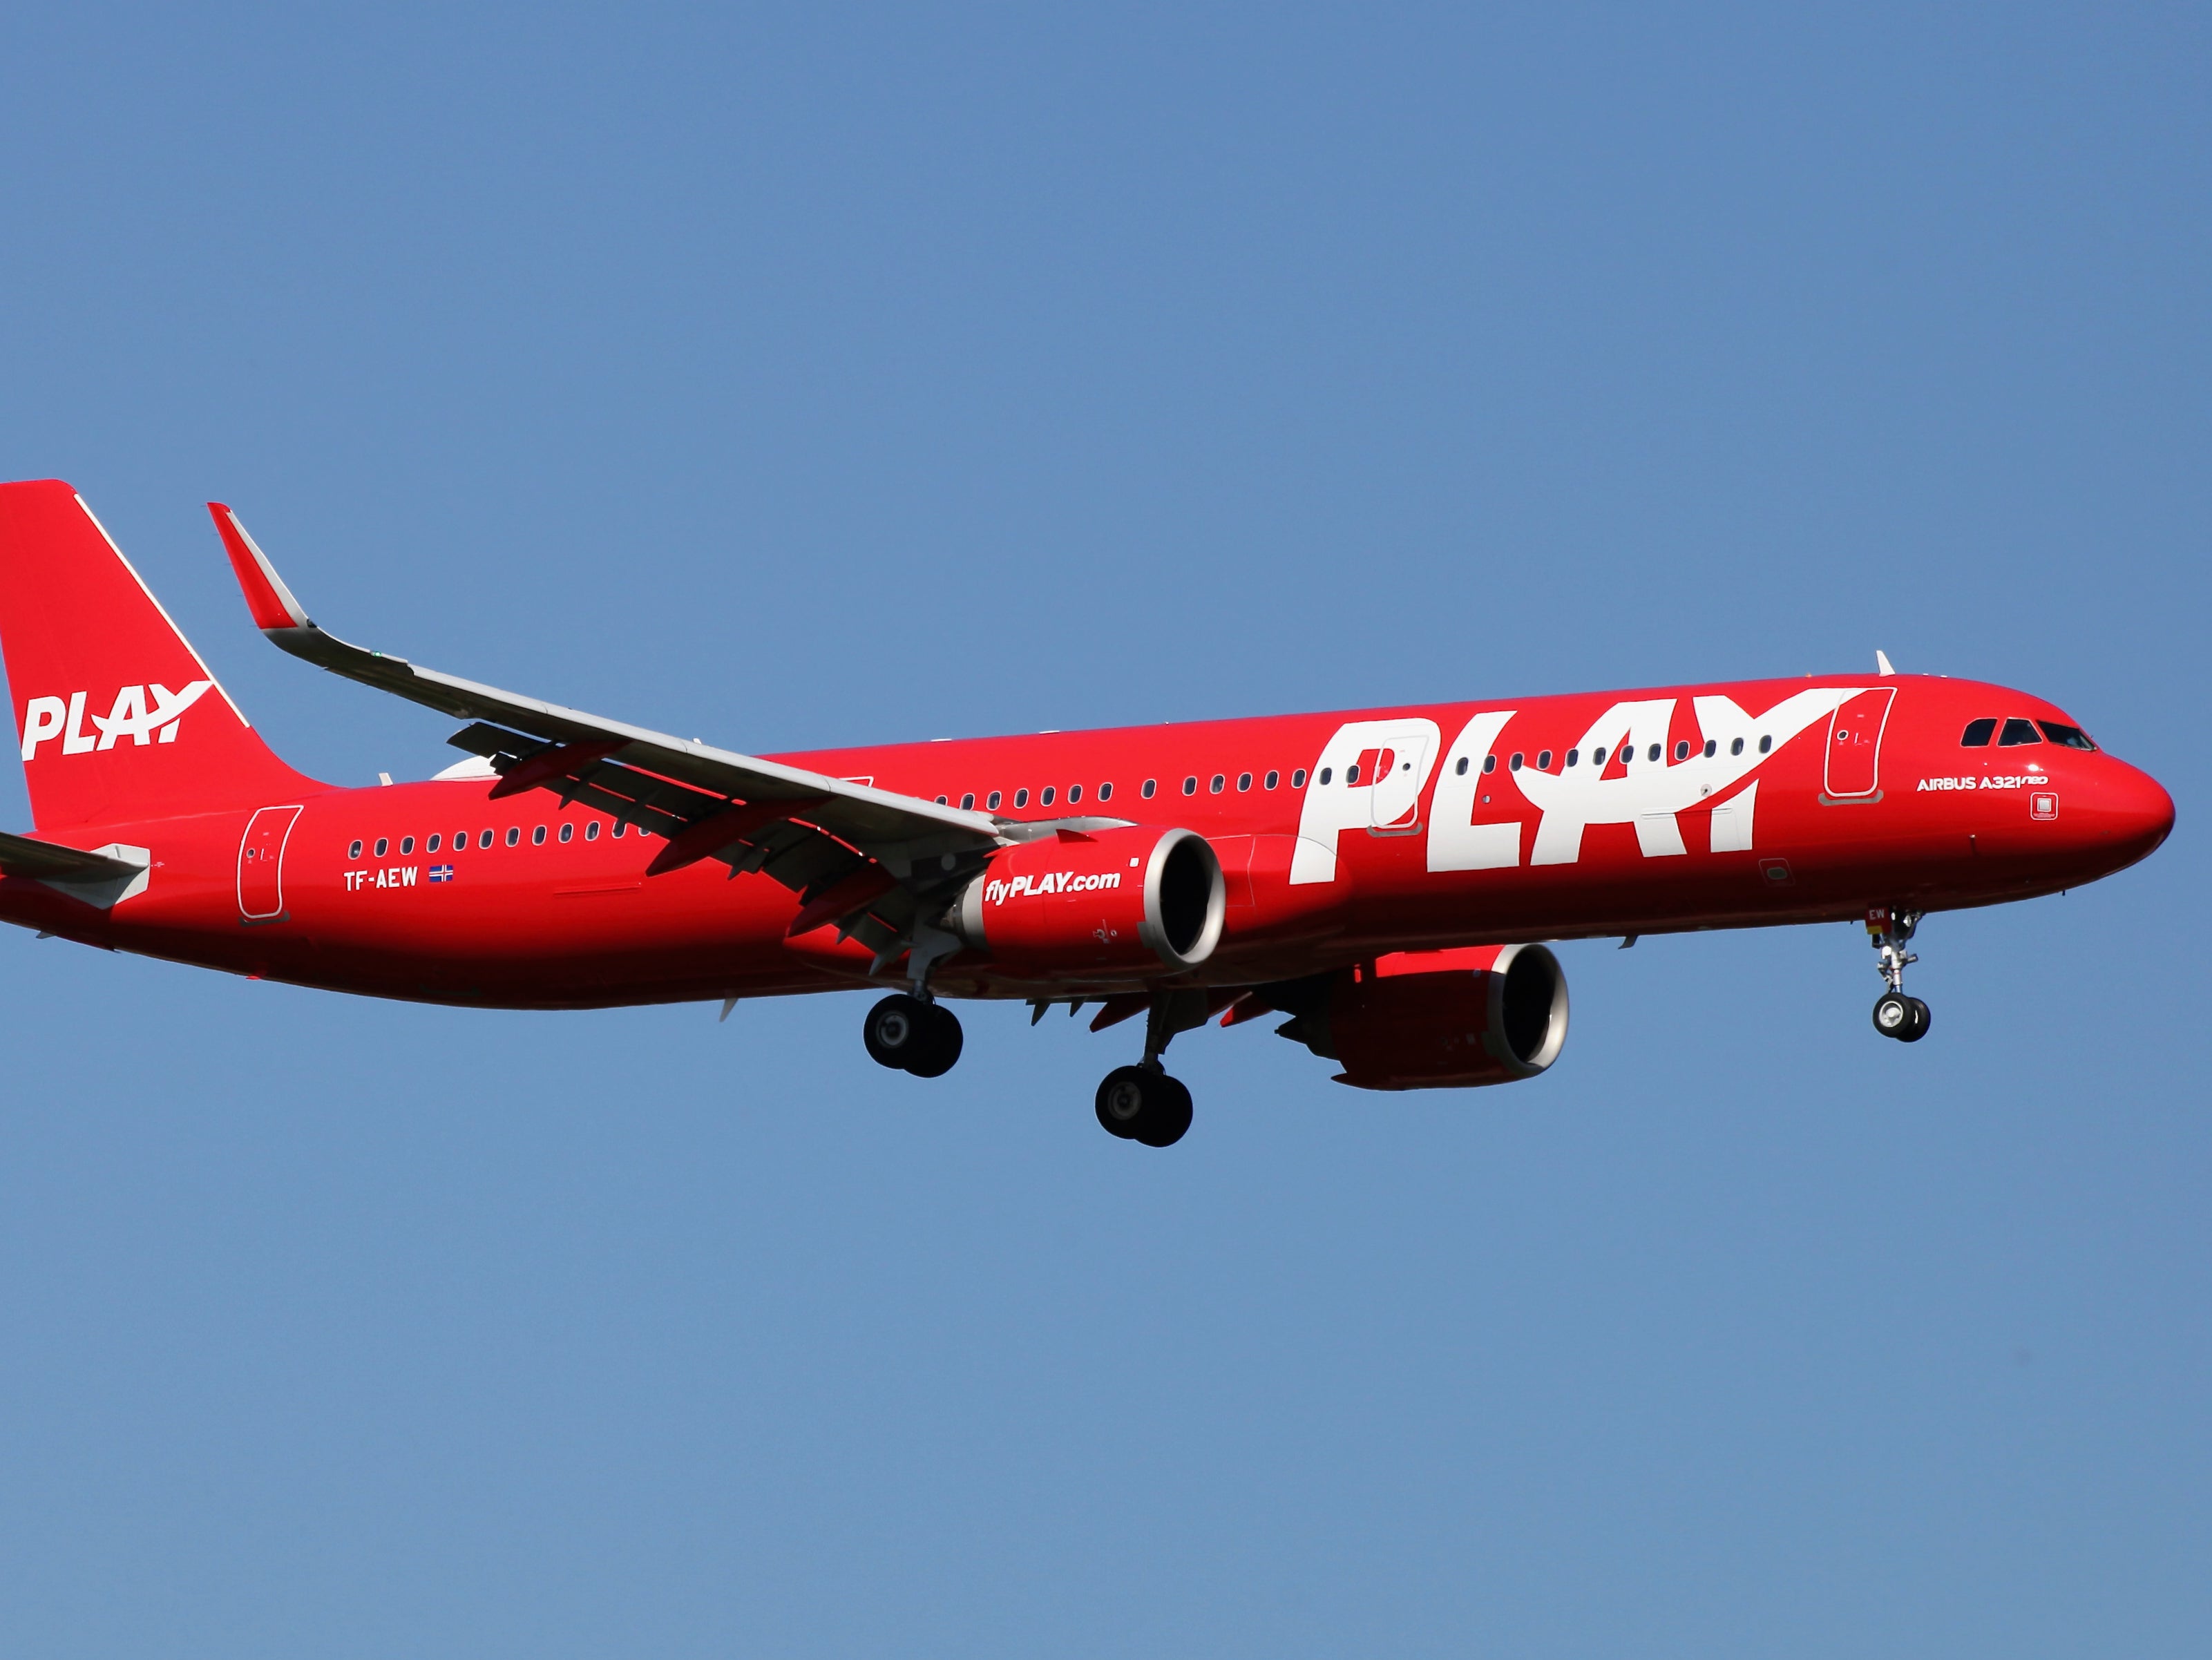 <p>Play is launching cheap Transatlantic flights</p>